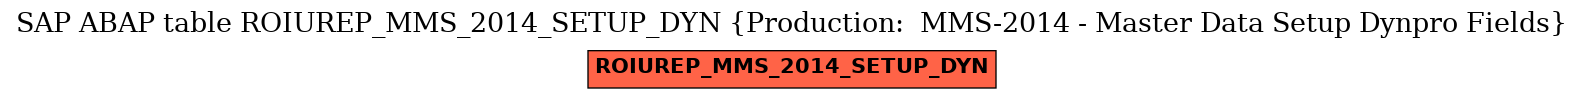 E-R Diagram for table ROIUREP_MMS_2014_SETUP_DYN (Production:  MMS-2014 - Master Data Setup Dynpro Fields)